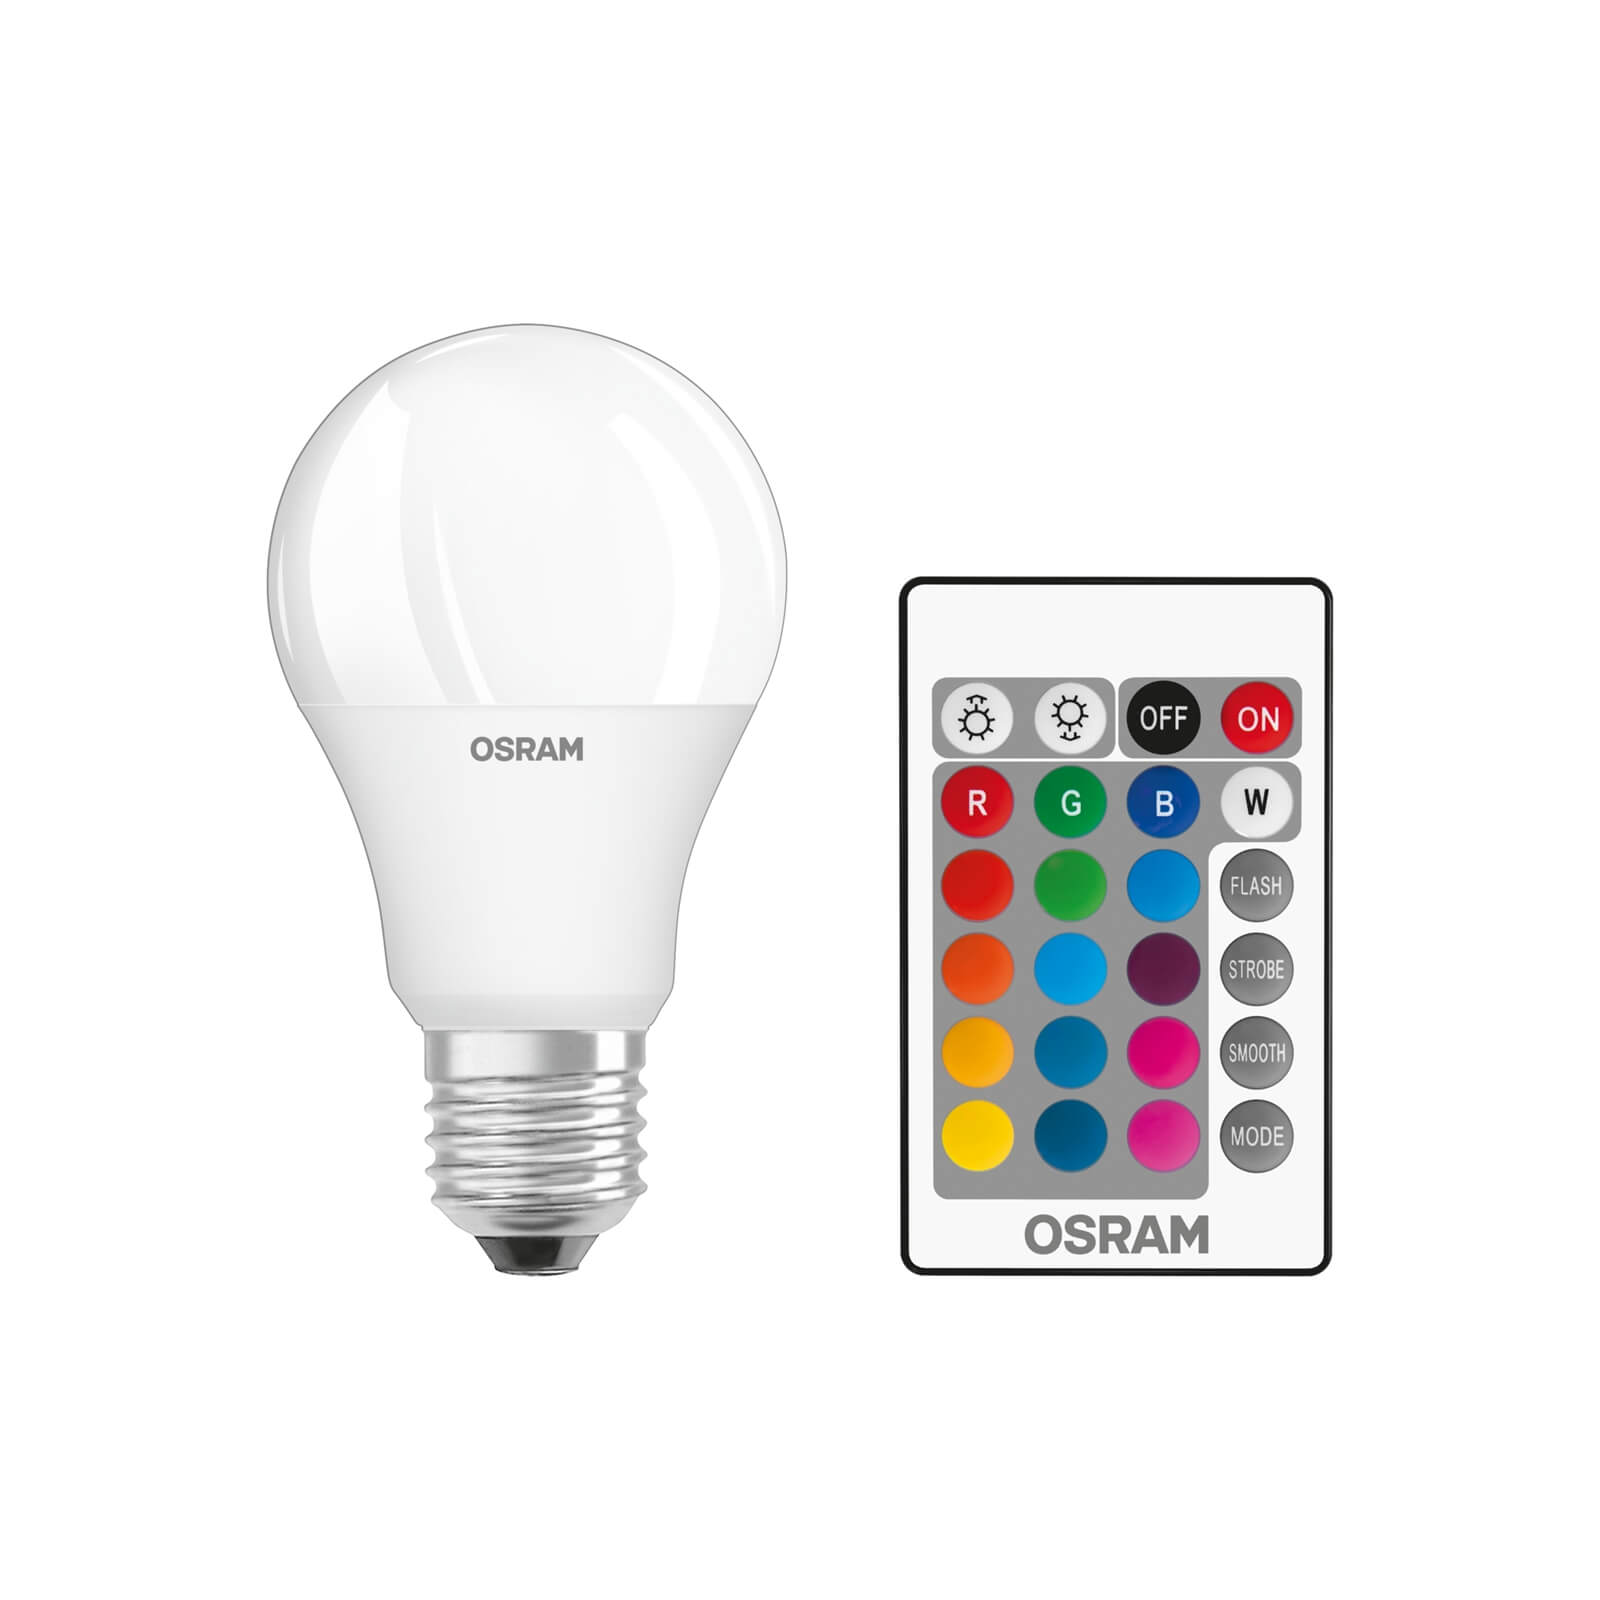 Osram LED Classic 60W RGBw Remote ES Light Bulb - 2 pack